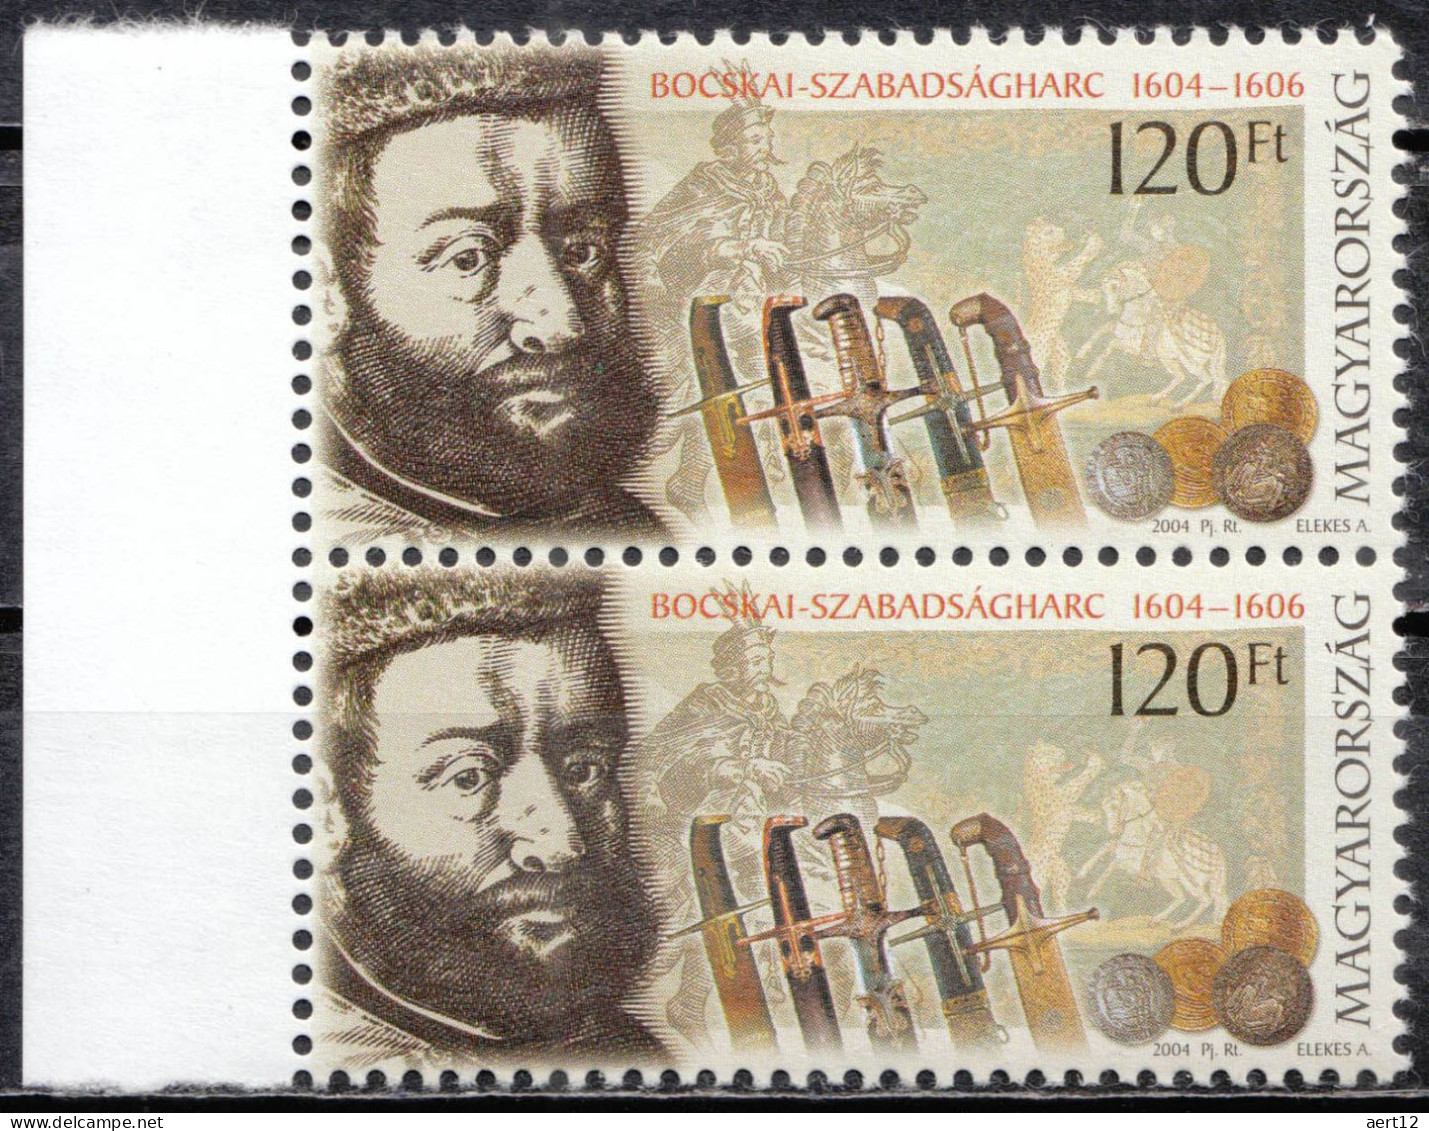 2004, Hungary, Bocskai, Anniversaries And Jubilees, Battle, Coins, Horses, 2 Stamps, MNH(**), HU 4954x2 - Ongebruikt